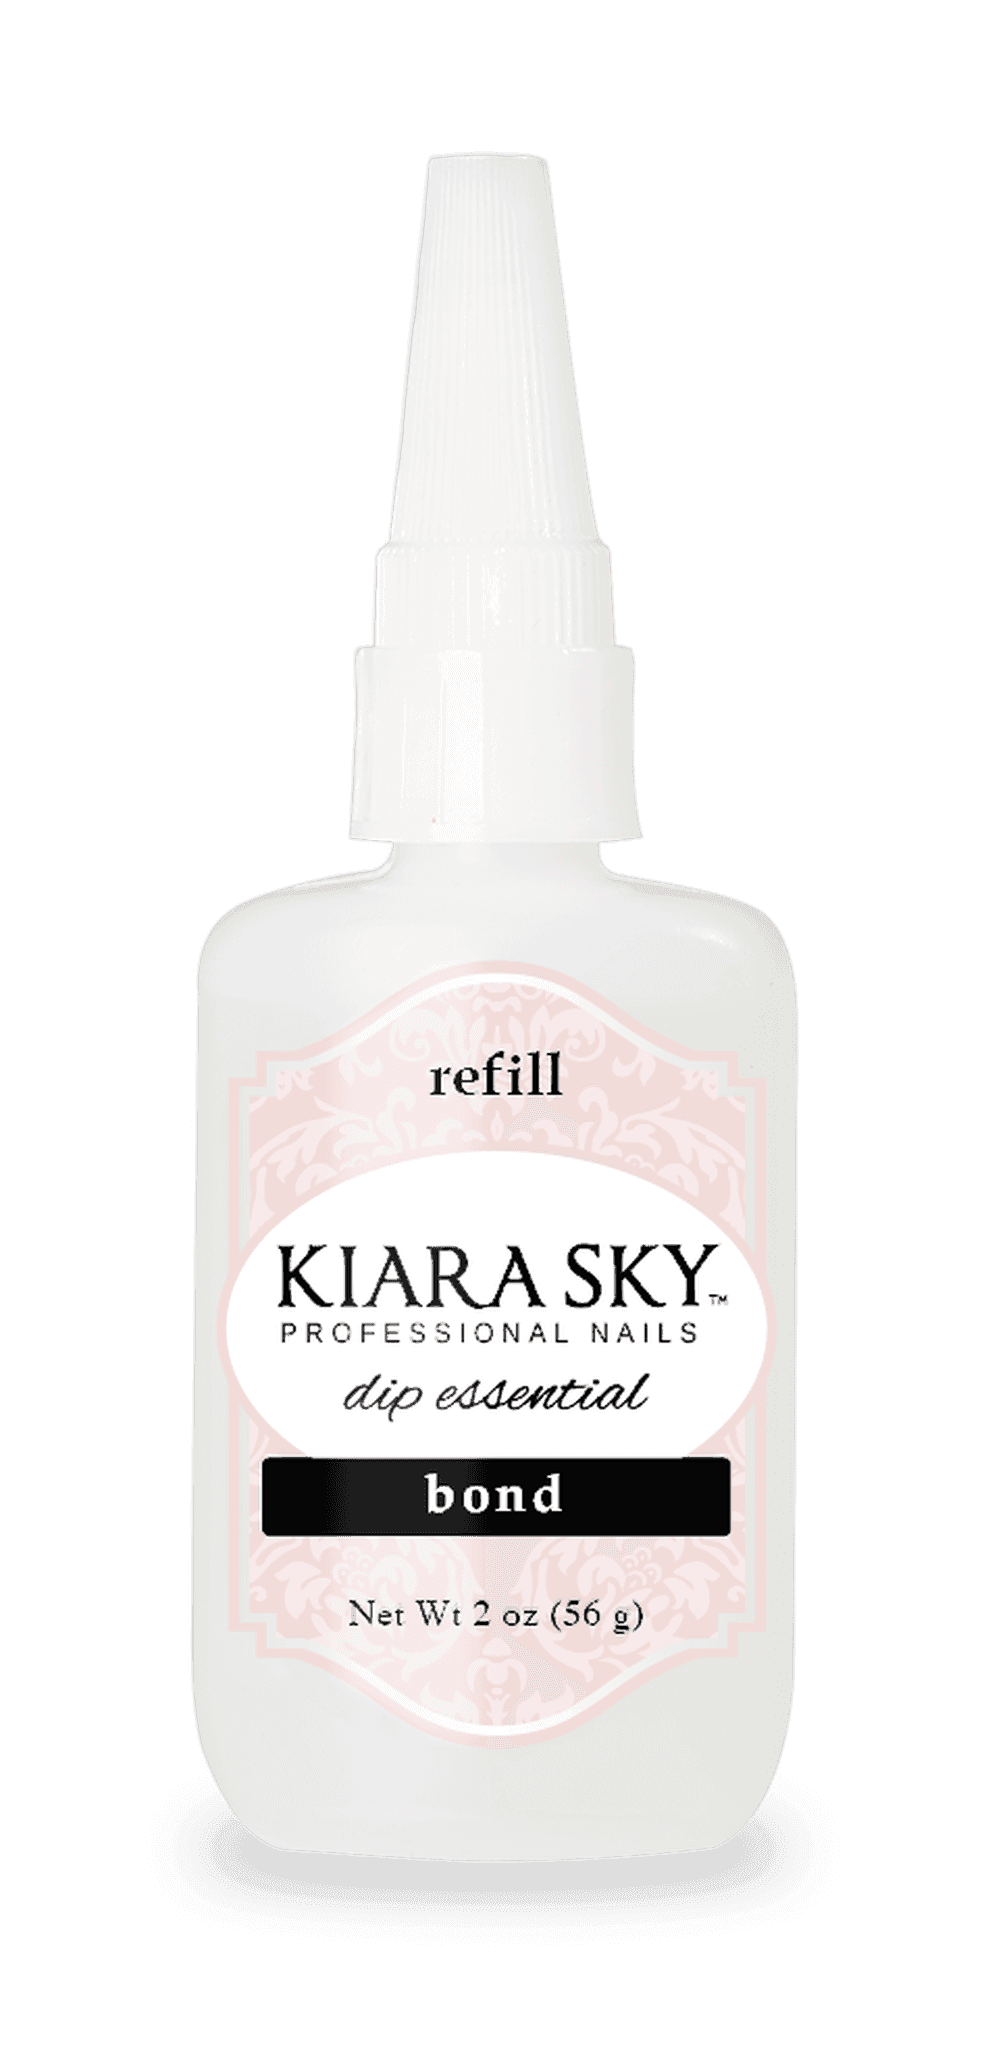 Kiara Sky - Dip Liquid Bond Refill 2 fl.oz